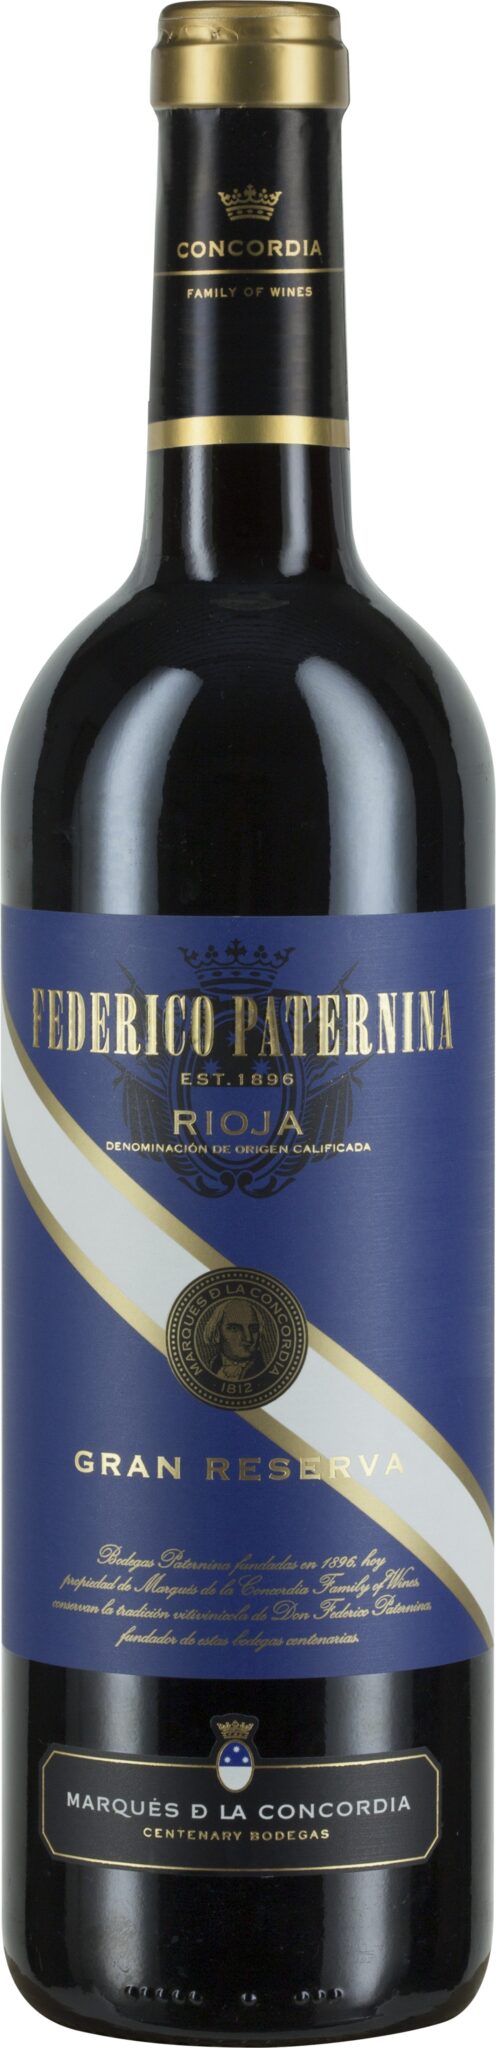 Gran online DOCa bestellen Federico Reserva Rioja Paternina